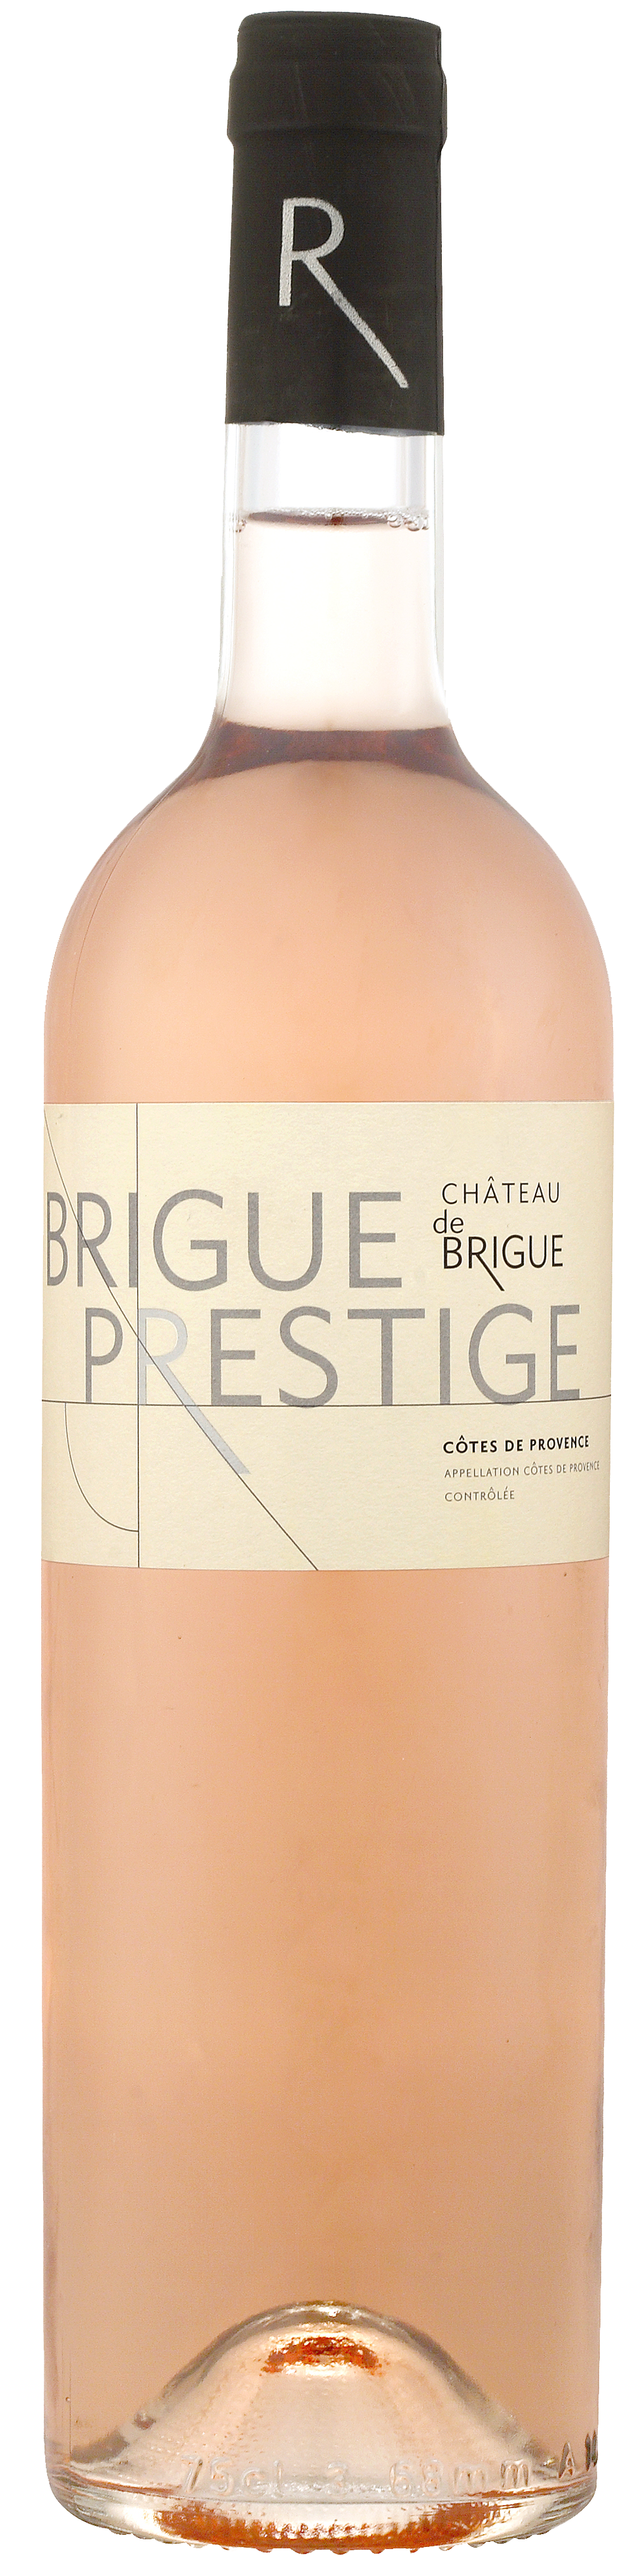 Bottle shot of 2012 Rosé Brigue Prestige